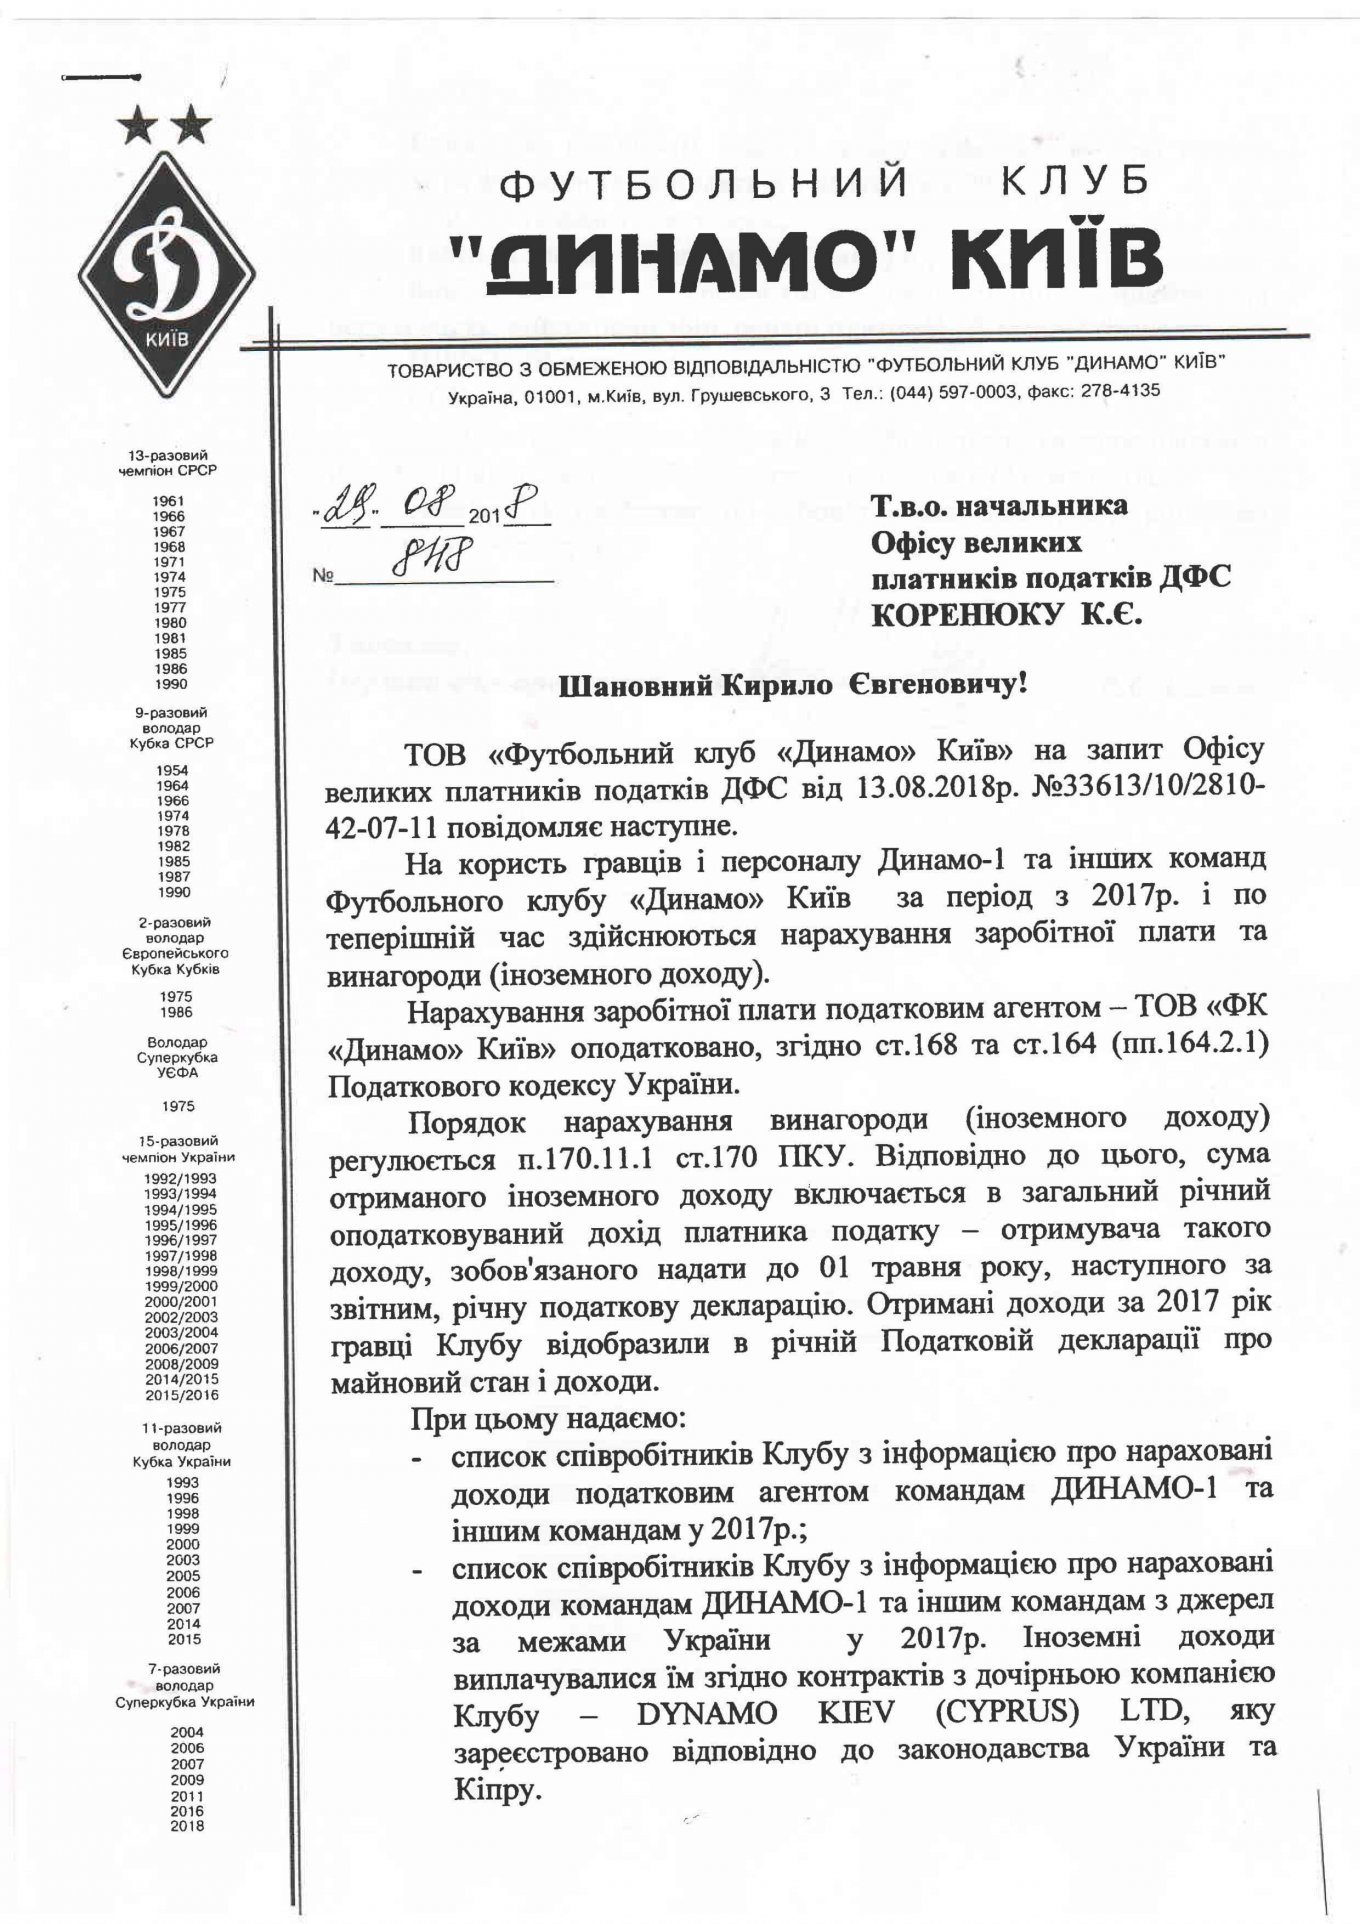 Документ об уплаченных налогах клубом Динамо